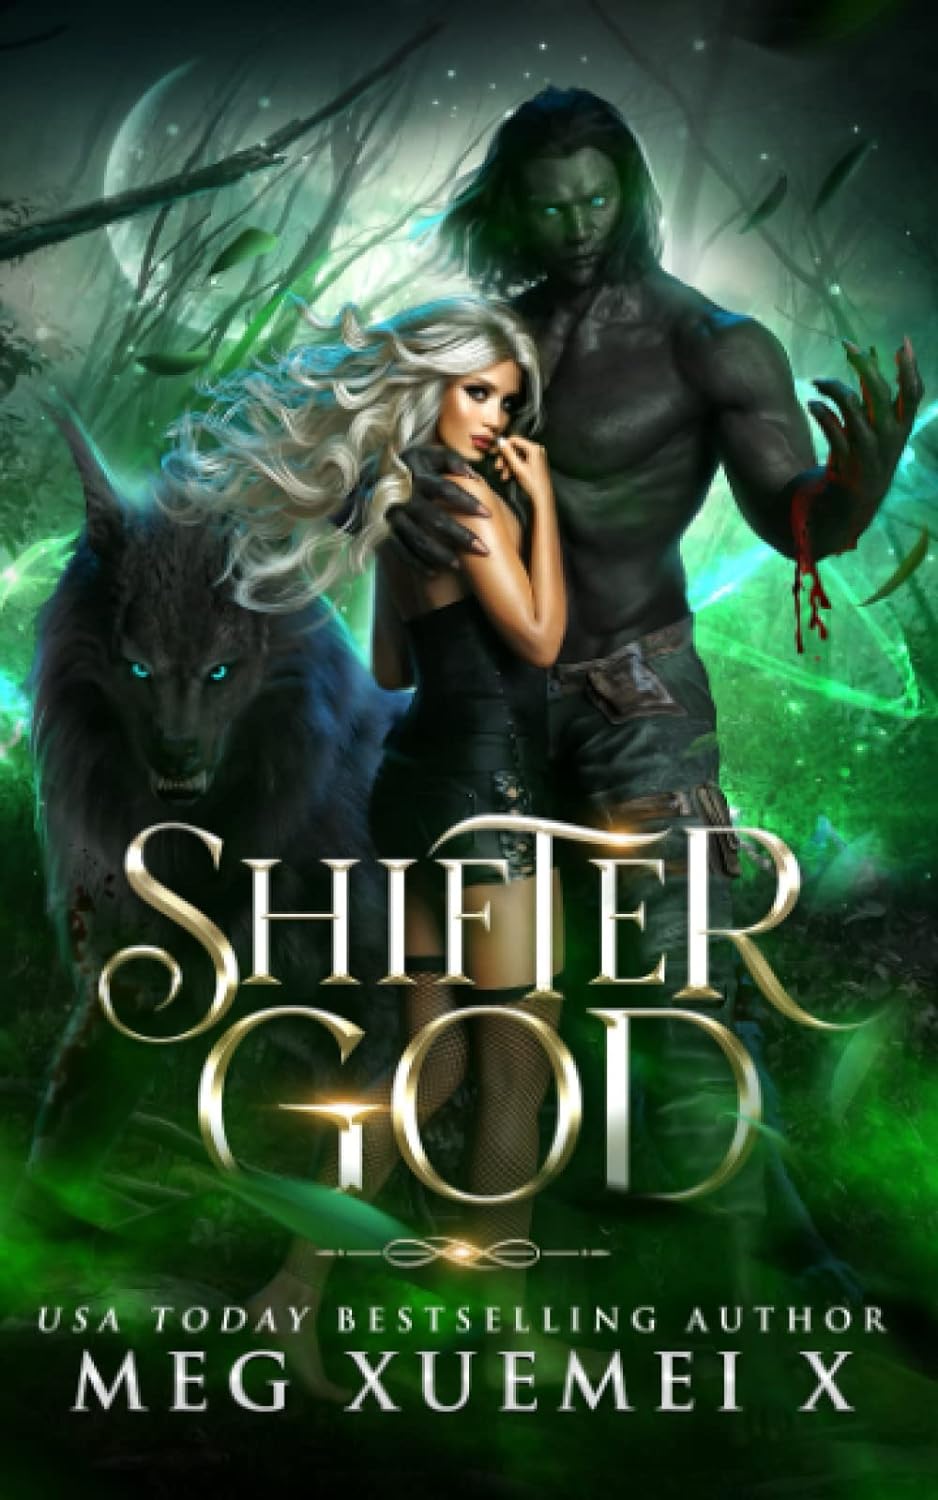 Shifter God (Monsters After Dark Book 1) by Meg Xuemei X